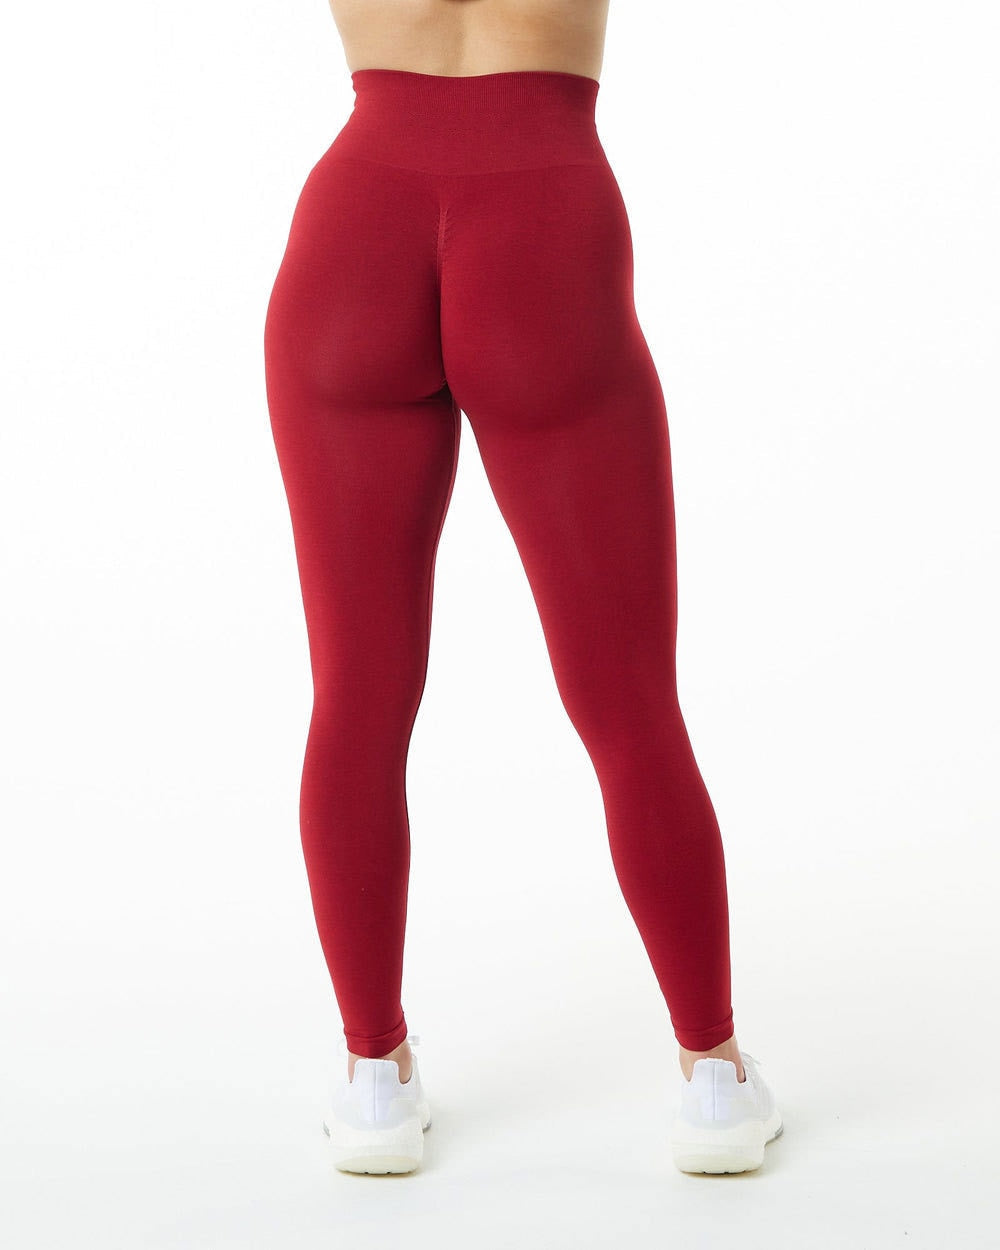 Buy Red Leggings for Women by INDIAN FLOWER Online | Ajio.com